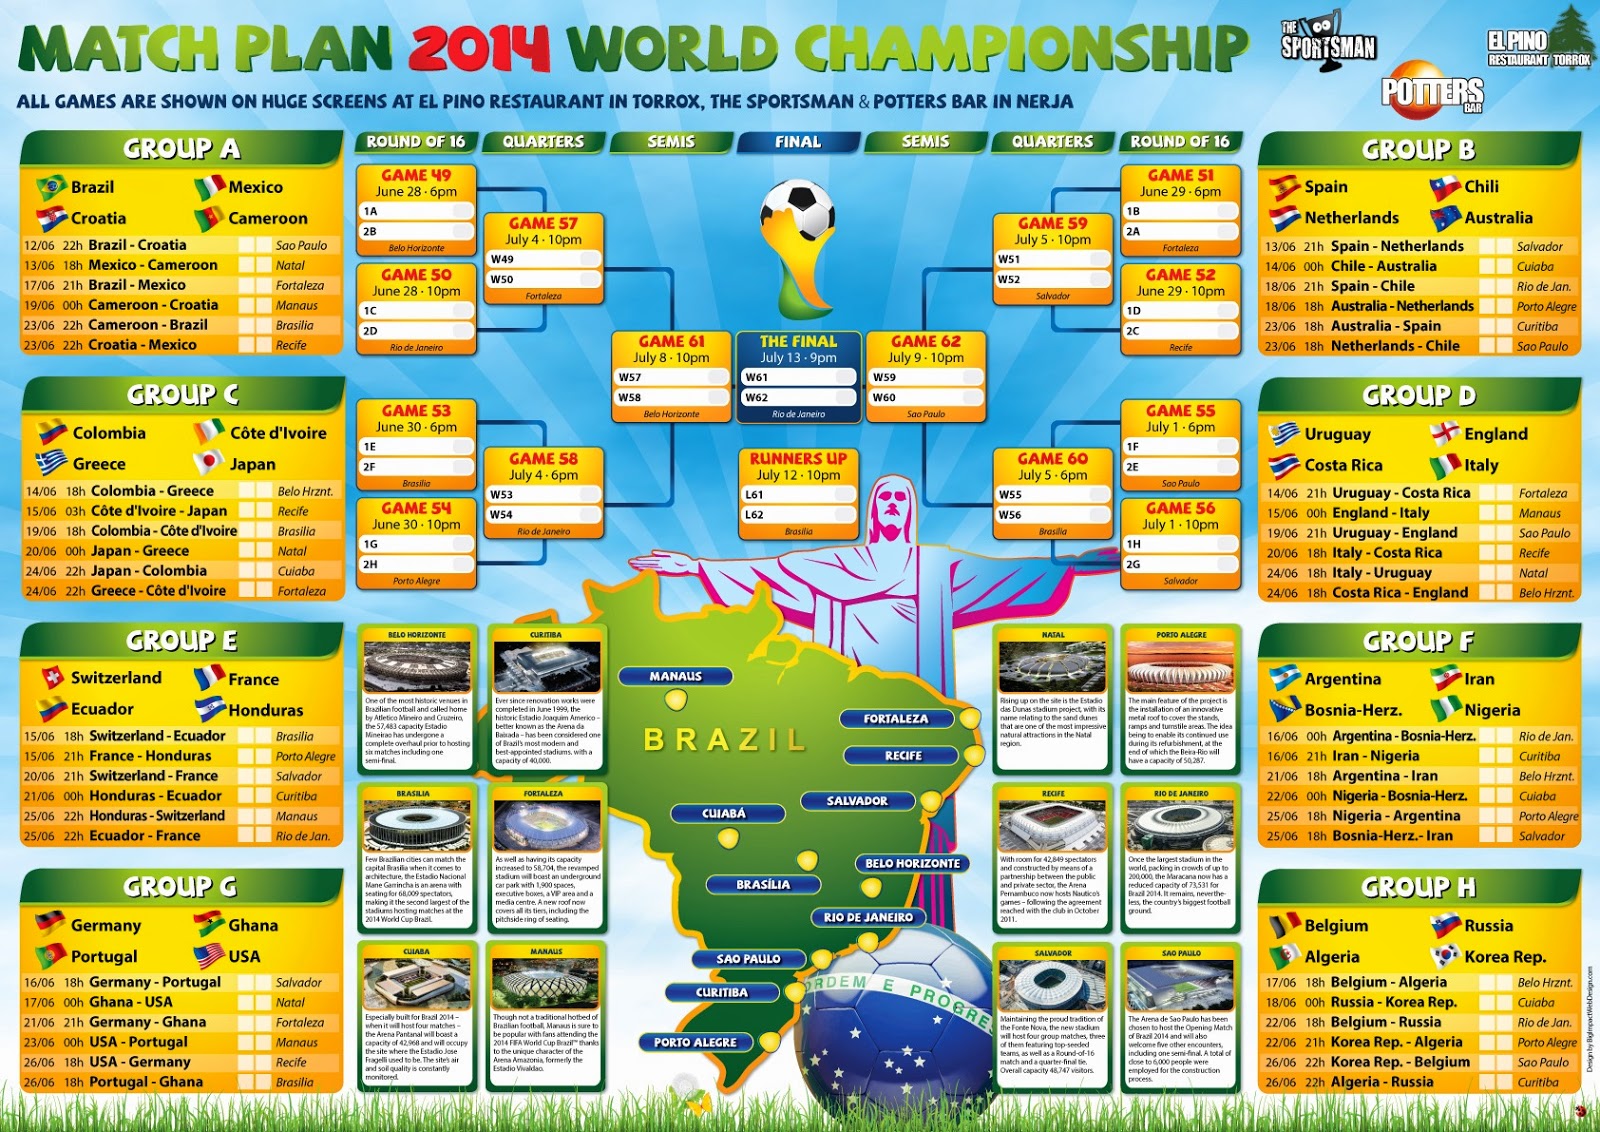 Match plan 2014 World Championship